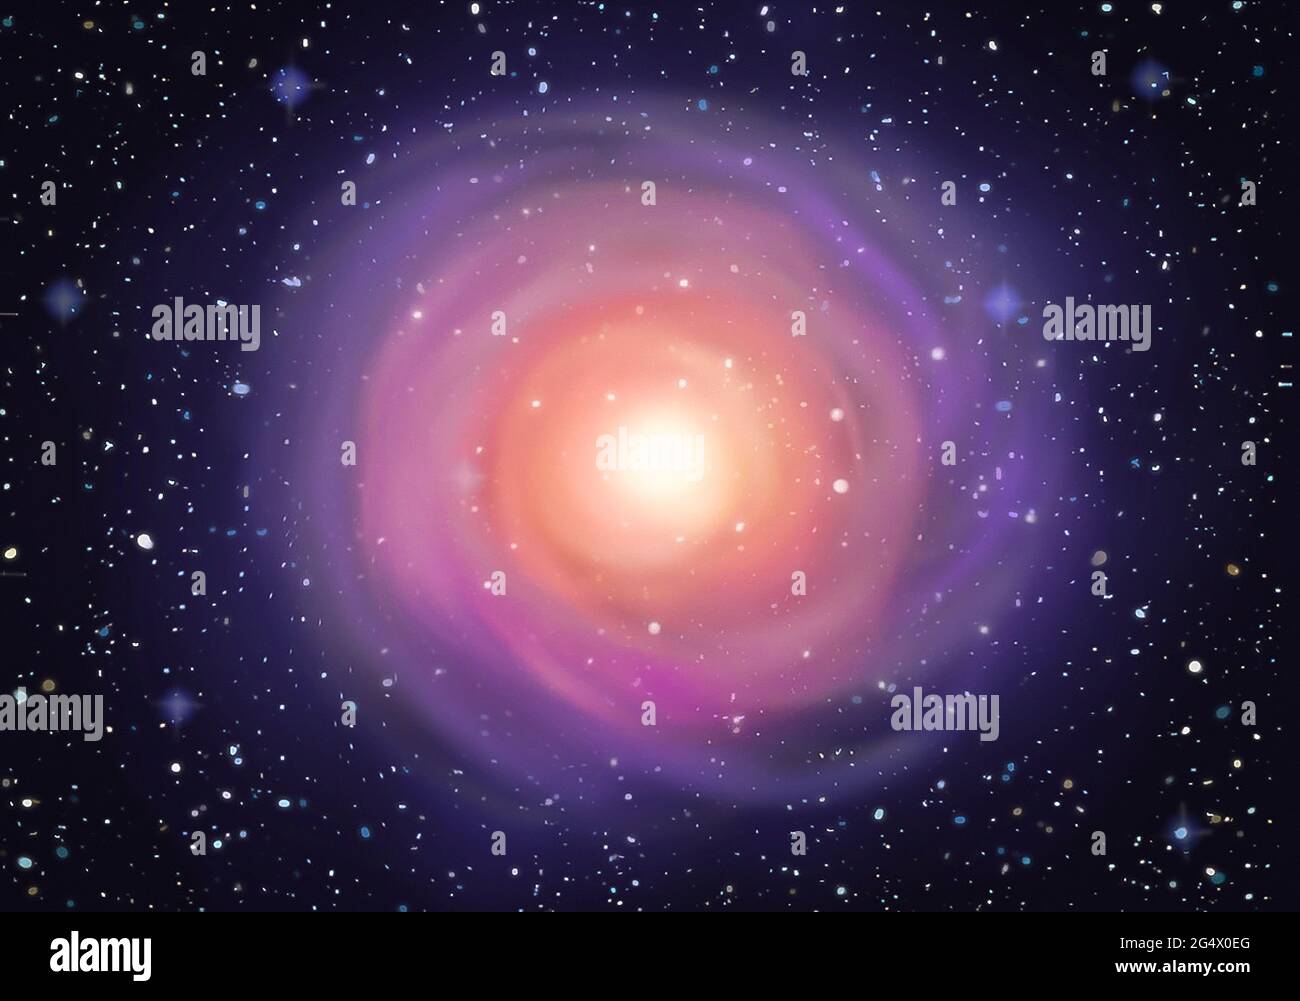 Universe, galaxy, planets digital paiting Stock Photo